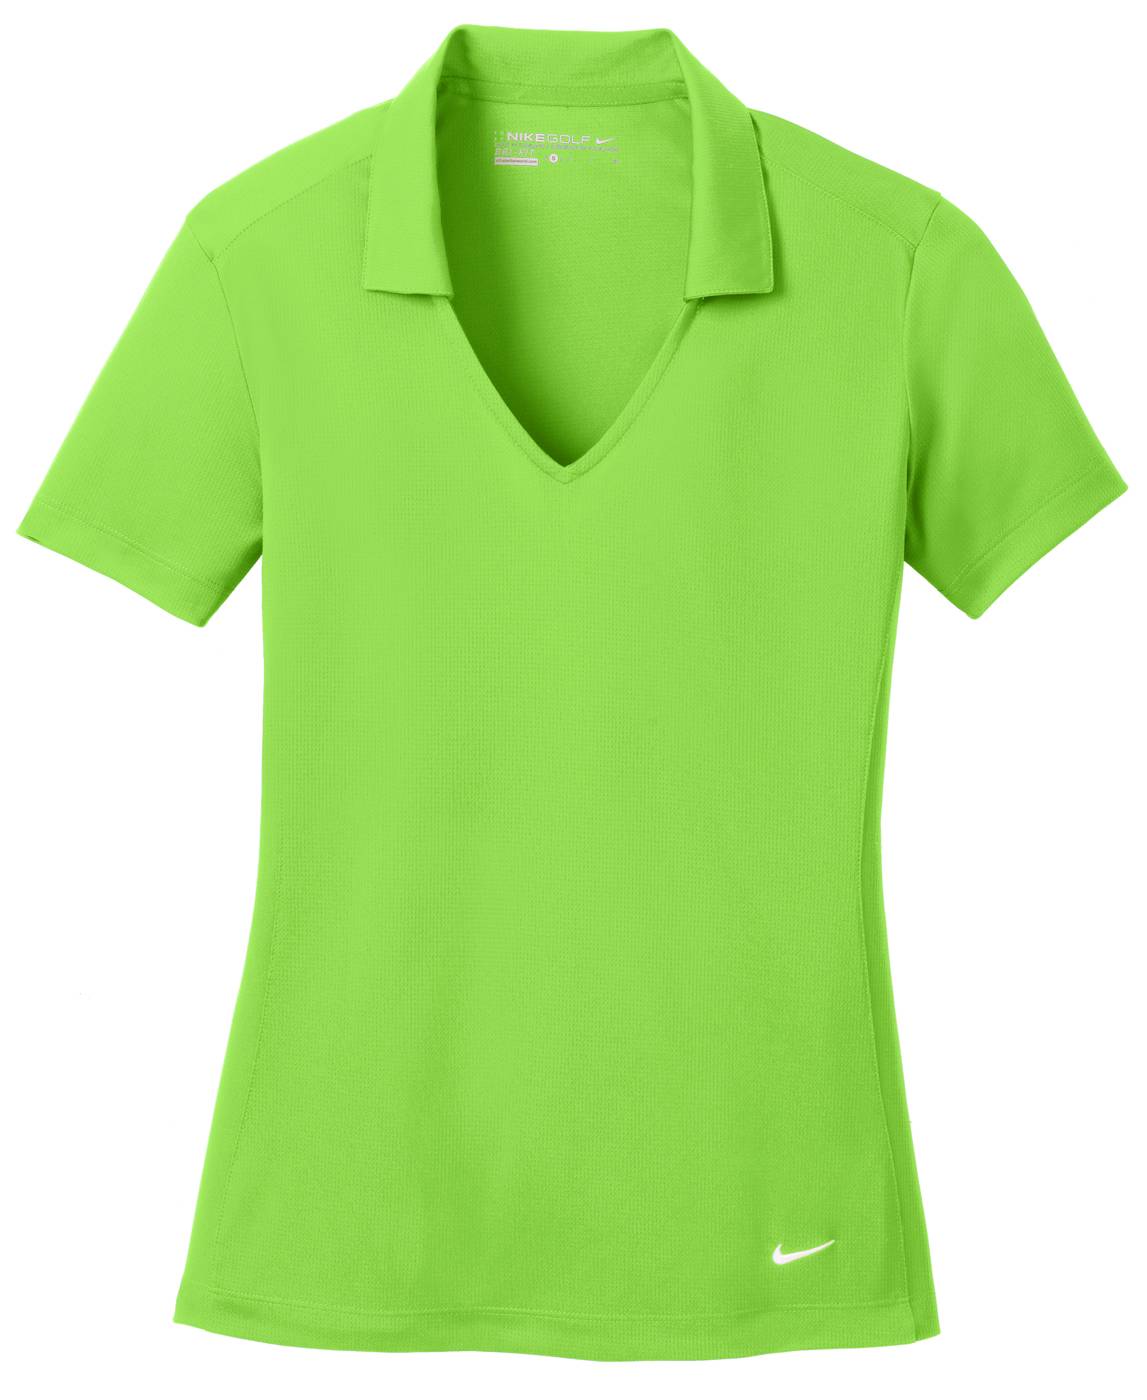 Nike Golf Polo Size Chart